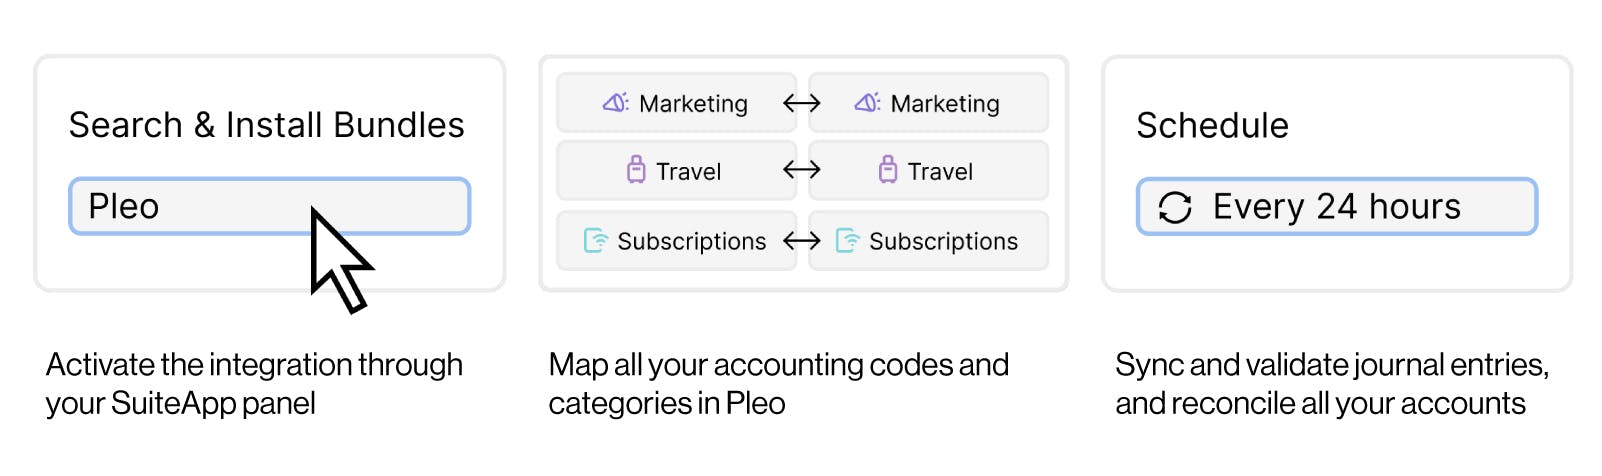 NetSuite Pleo integration step-by-step 